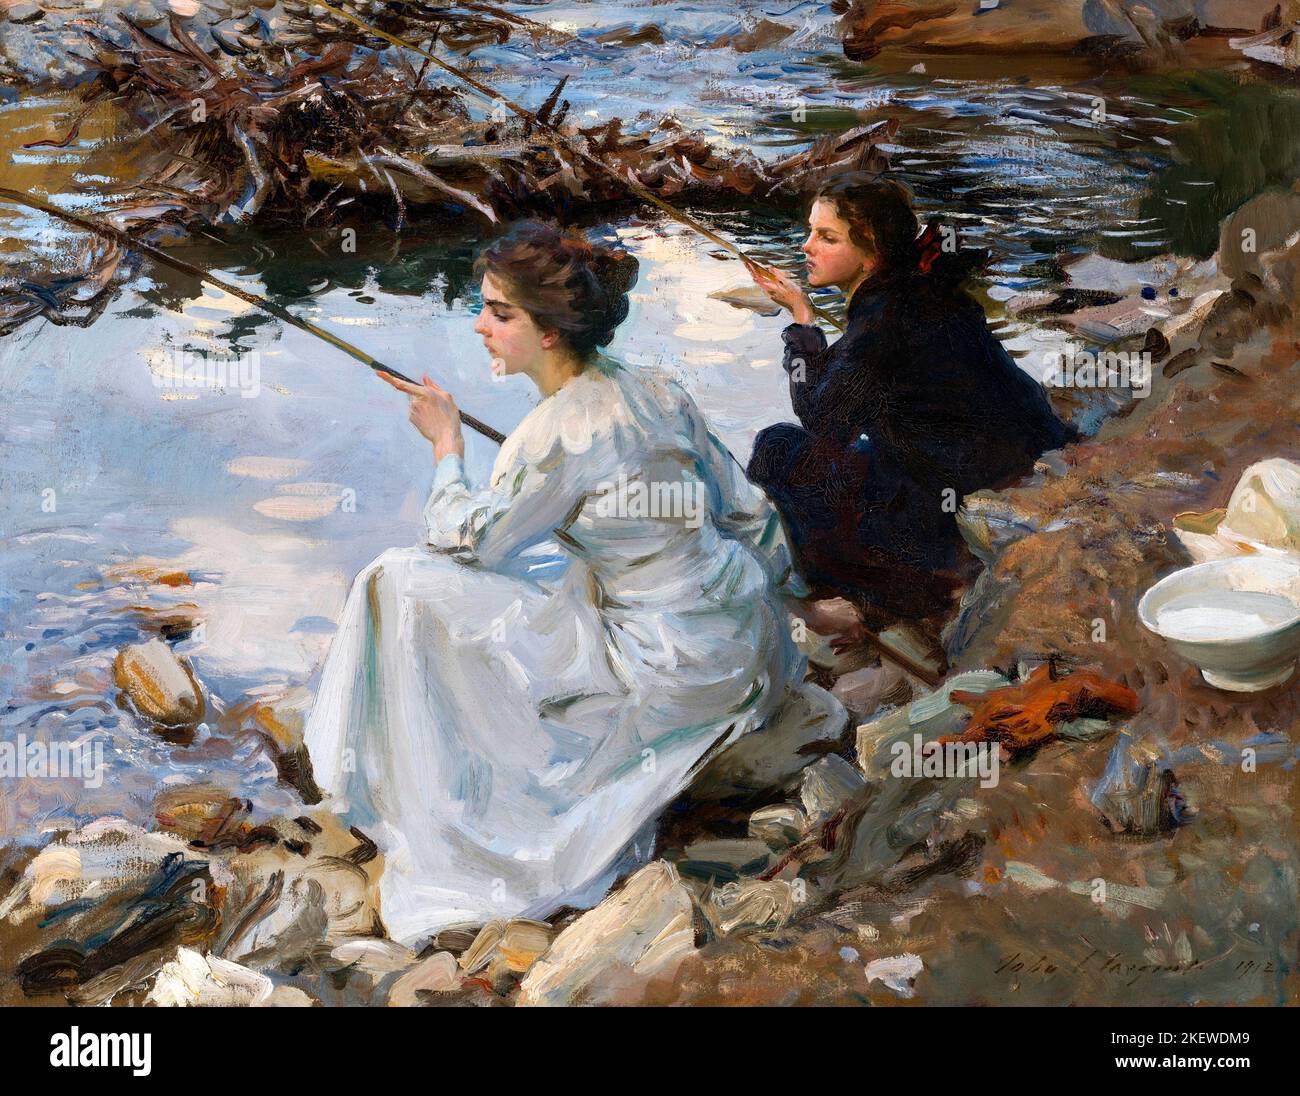 John Singer Sargent peinture. 'Two Girls Fishing' de John Singer Sargent (1856-1925), huile sur toile, 1912 Banque D'Images